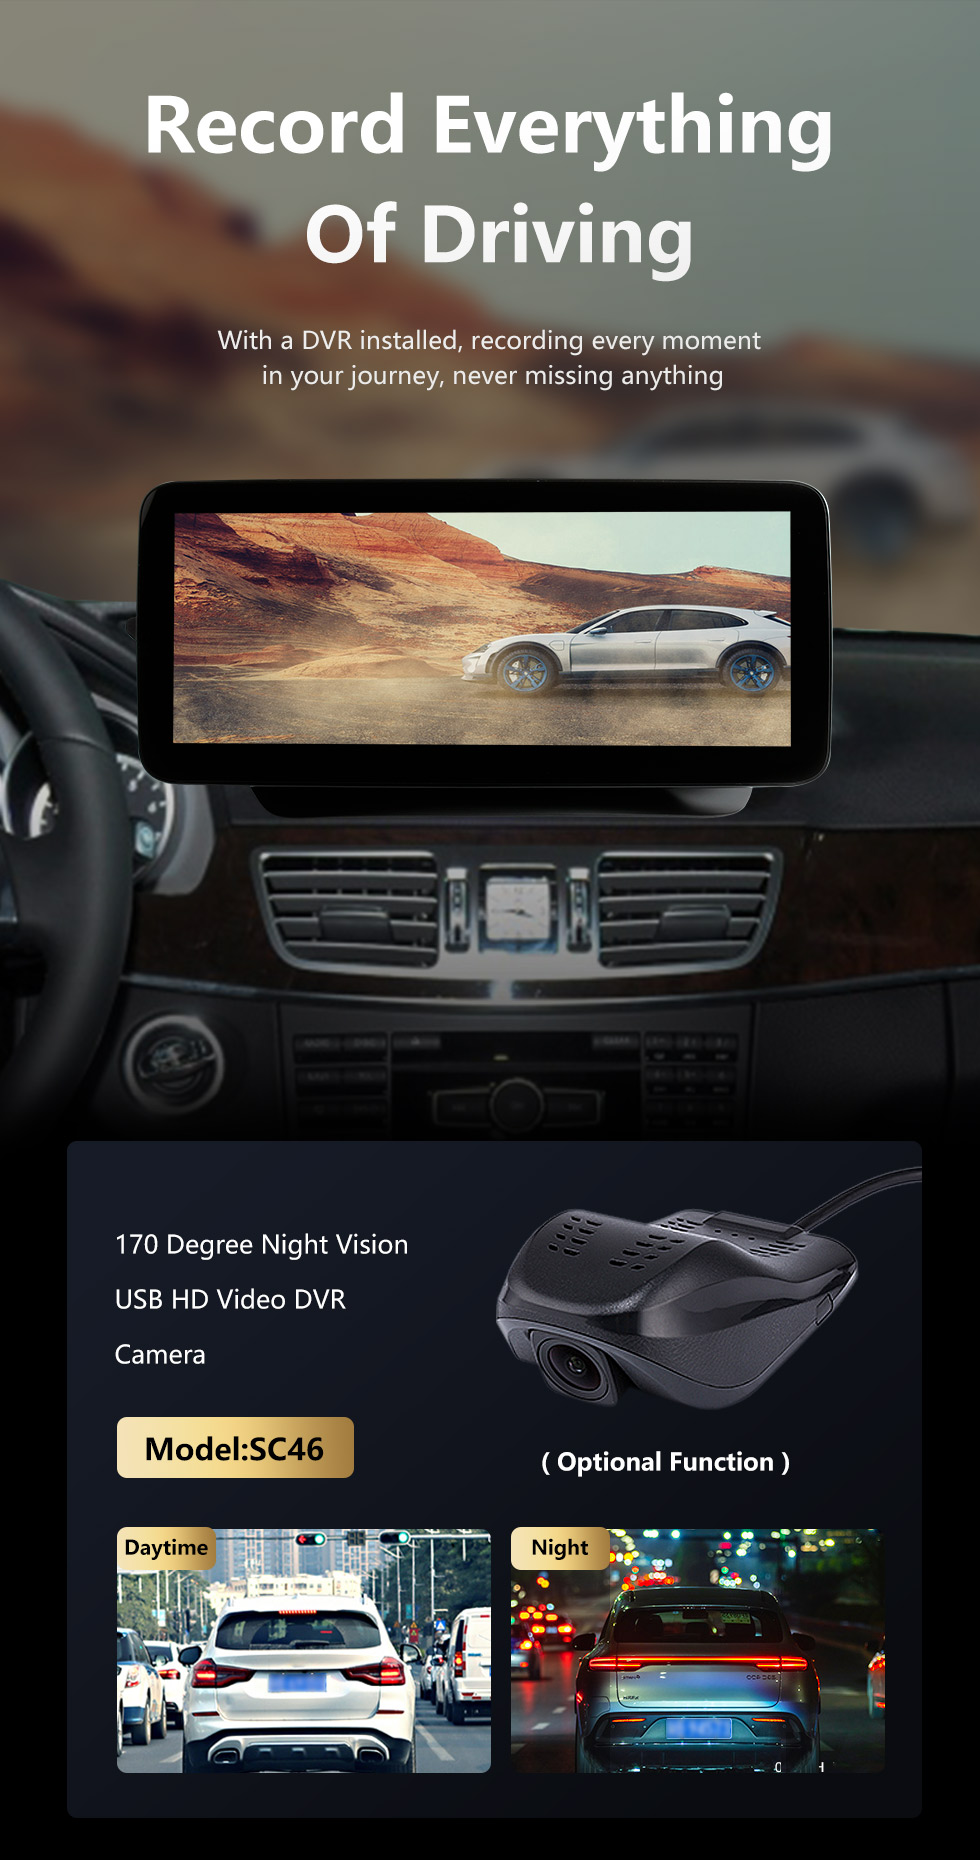 12.3 inch Touchscreen for 2009-2014 2015 2016 Mercedes E Class W212 E Class  Coupe W207 E63 E260 E200 E300 E400 E180 E320 E350 E400 E500 E550 E63AMG Radio  Android Auto Carplay GPS